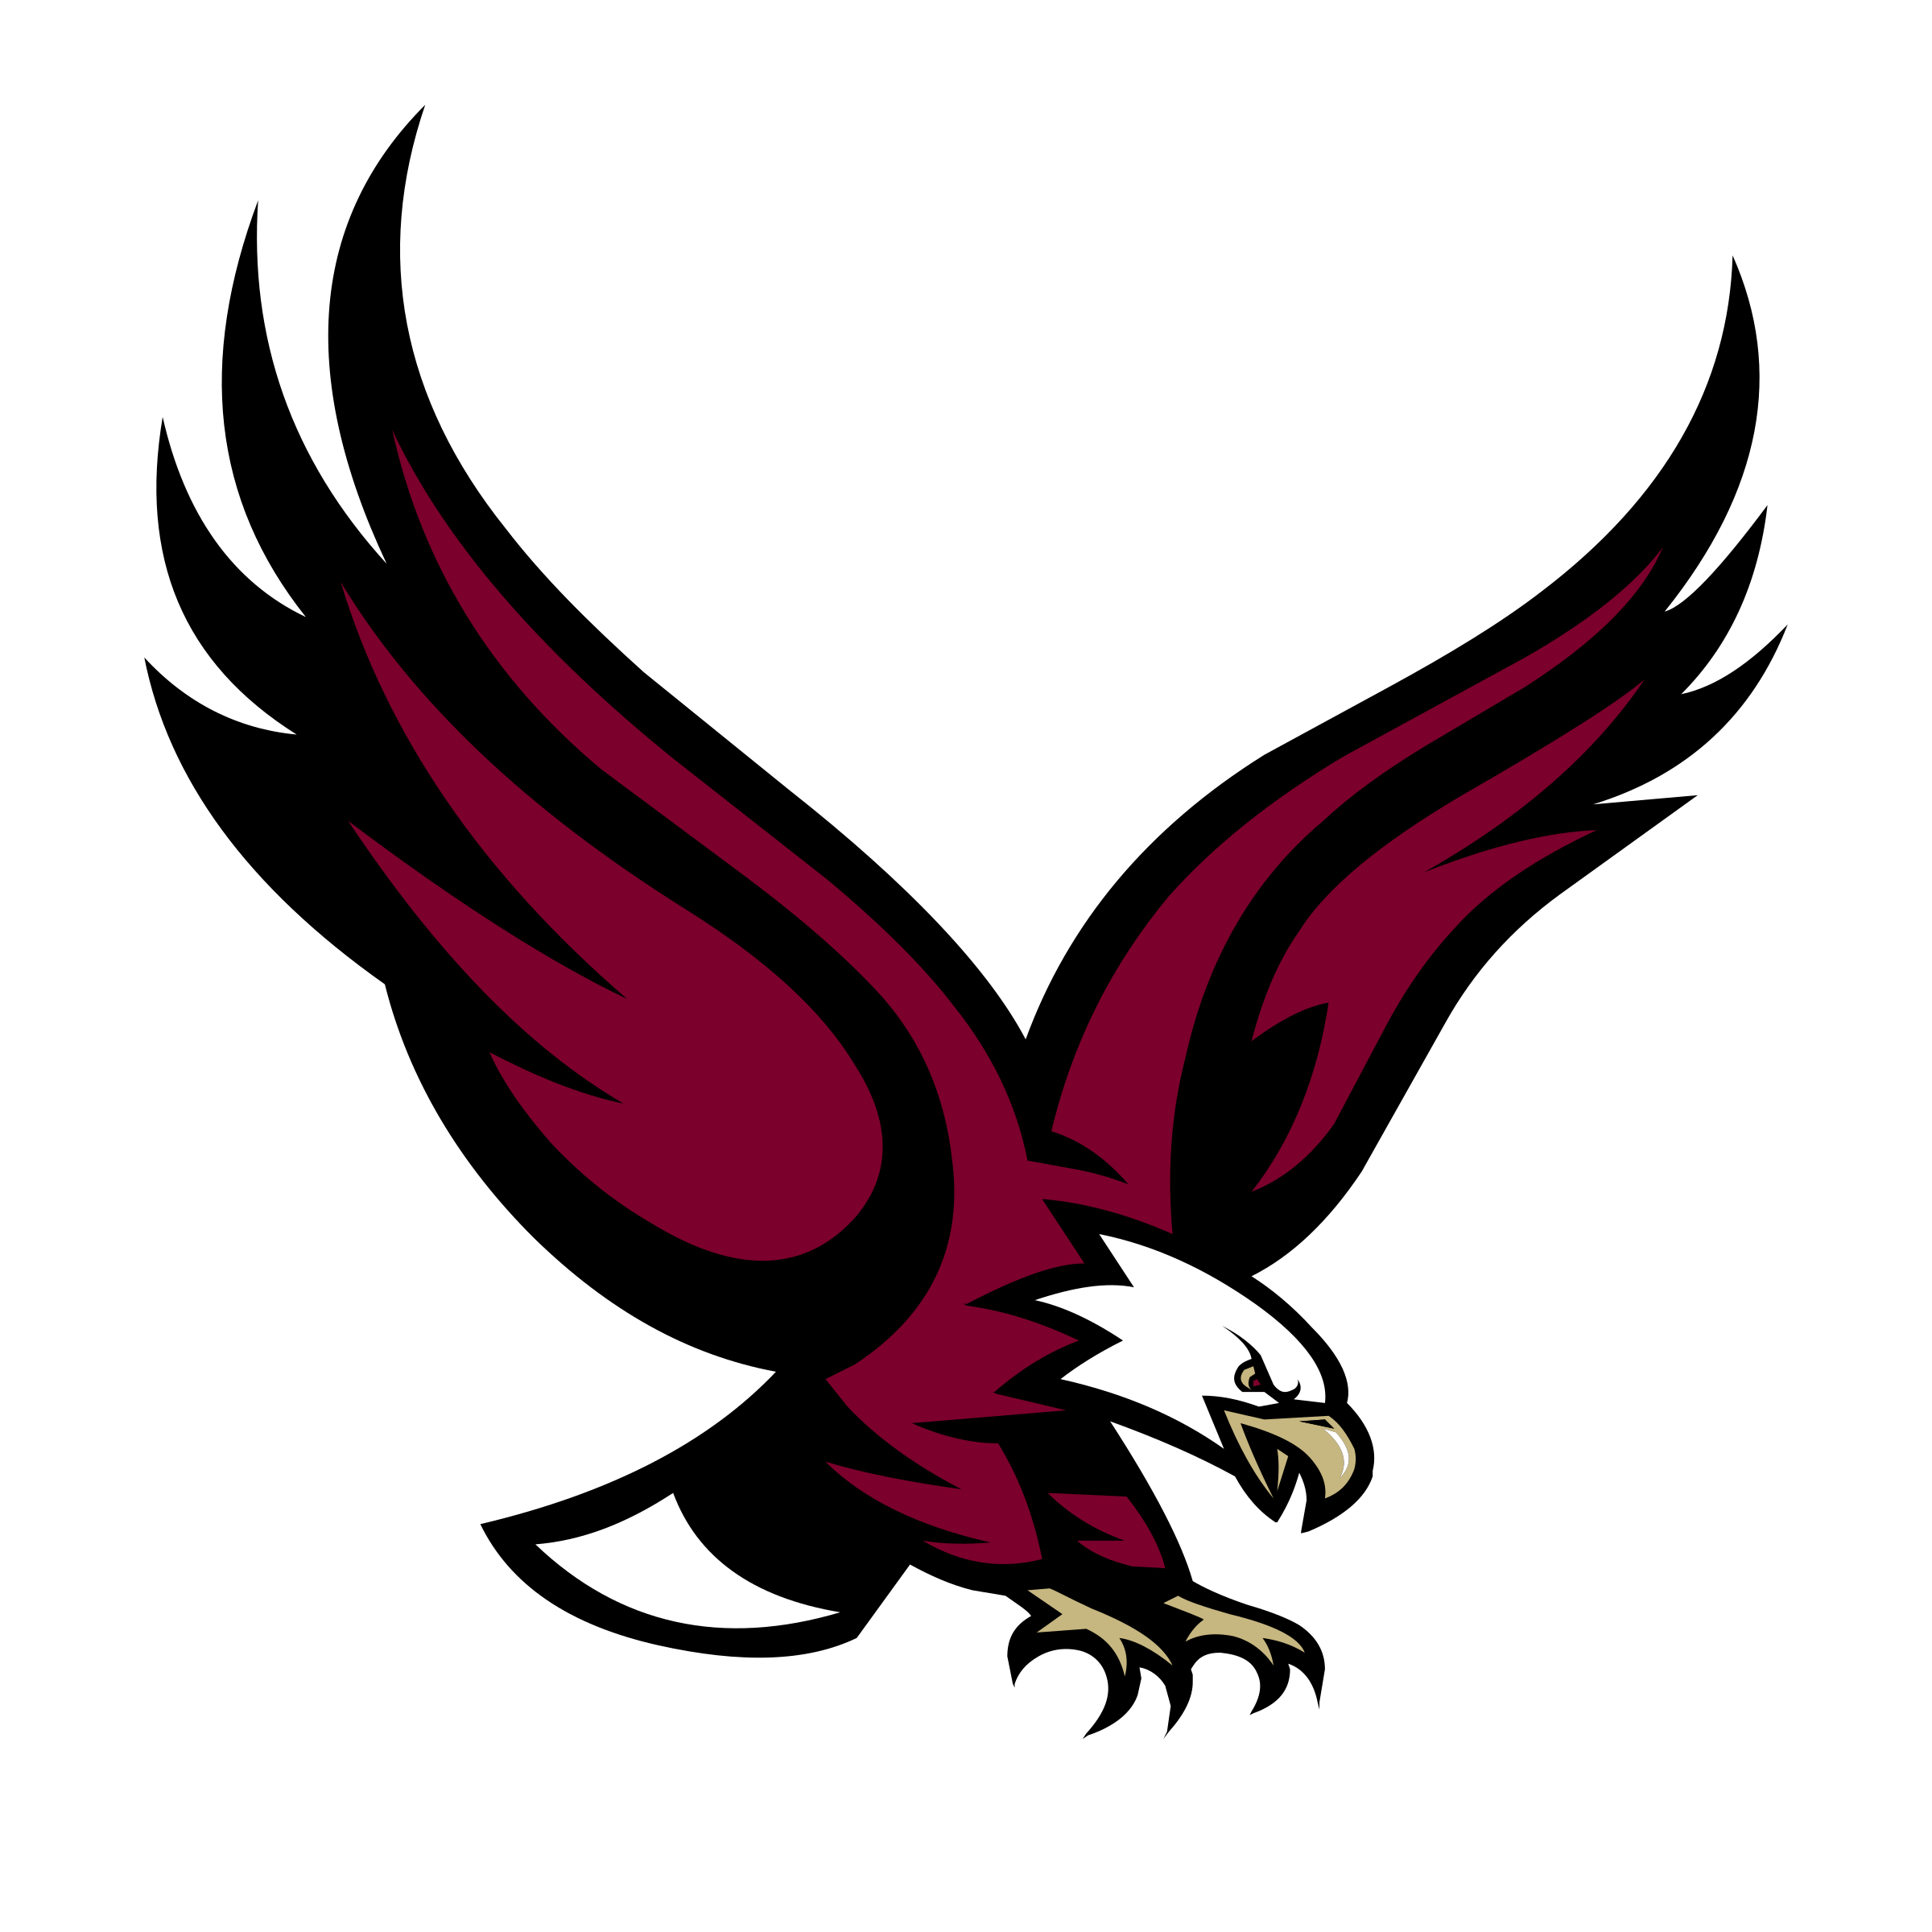 Black and Red Eagle Logo - Boston College Eagles 02 Logo PNG Transparent & SVG Vector - Freebie ...